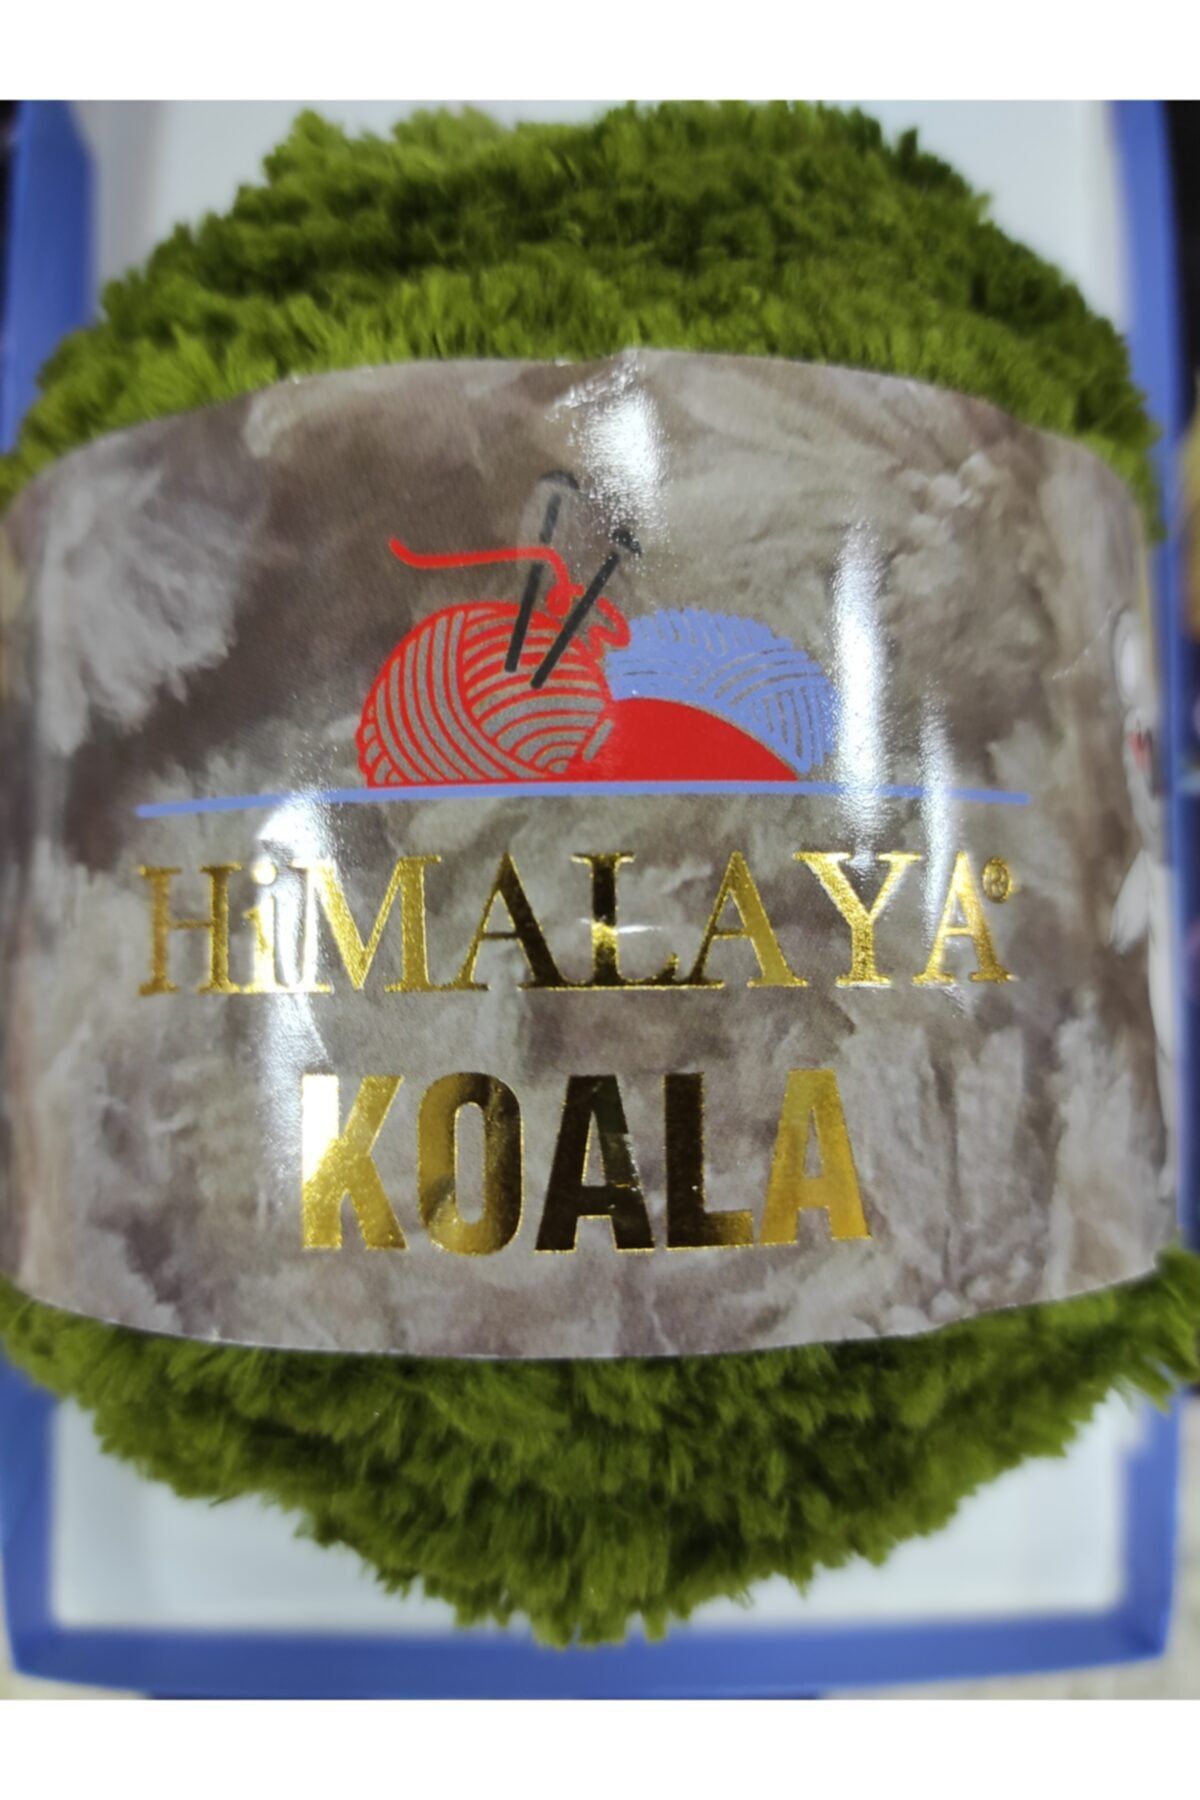 Himalaya Koala 75736